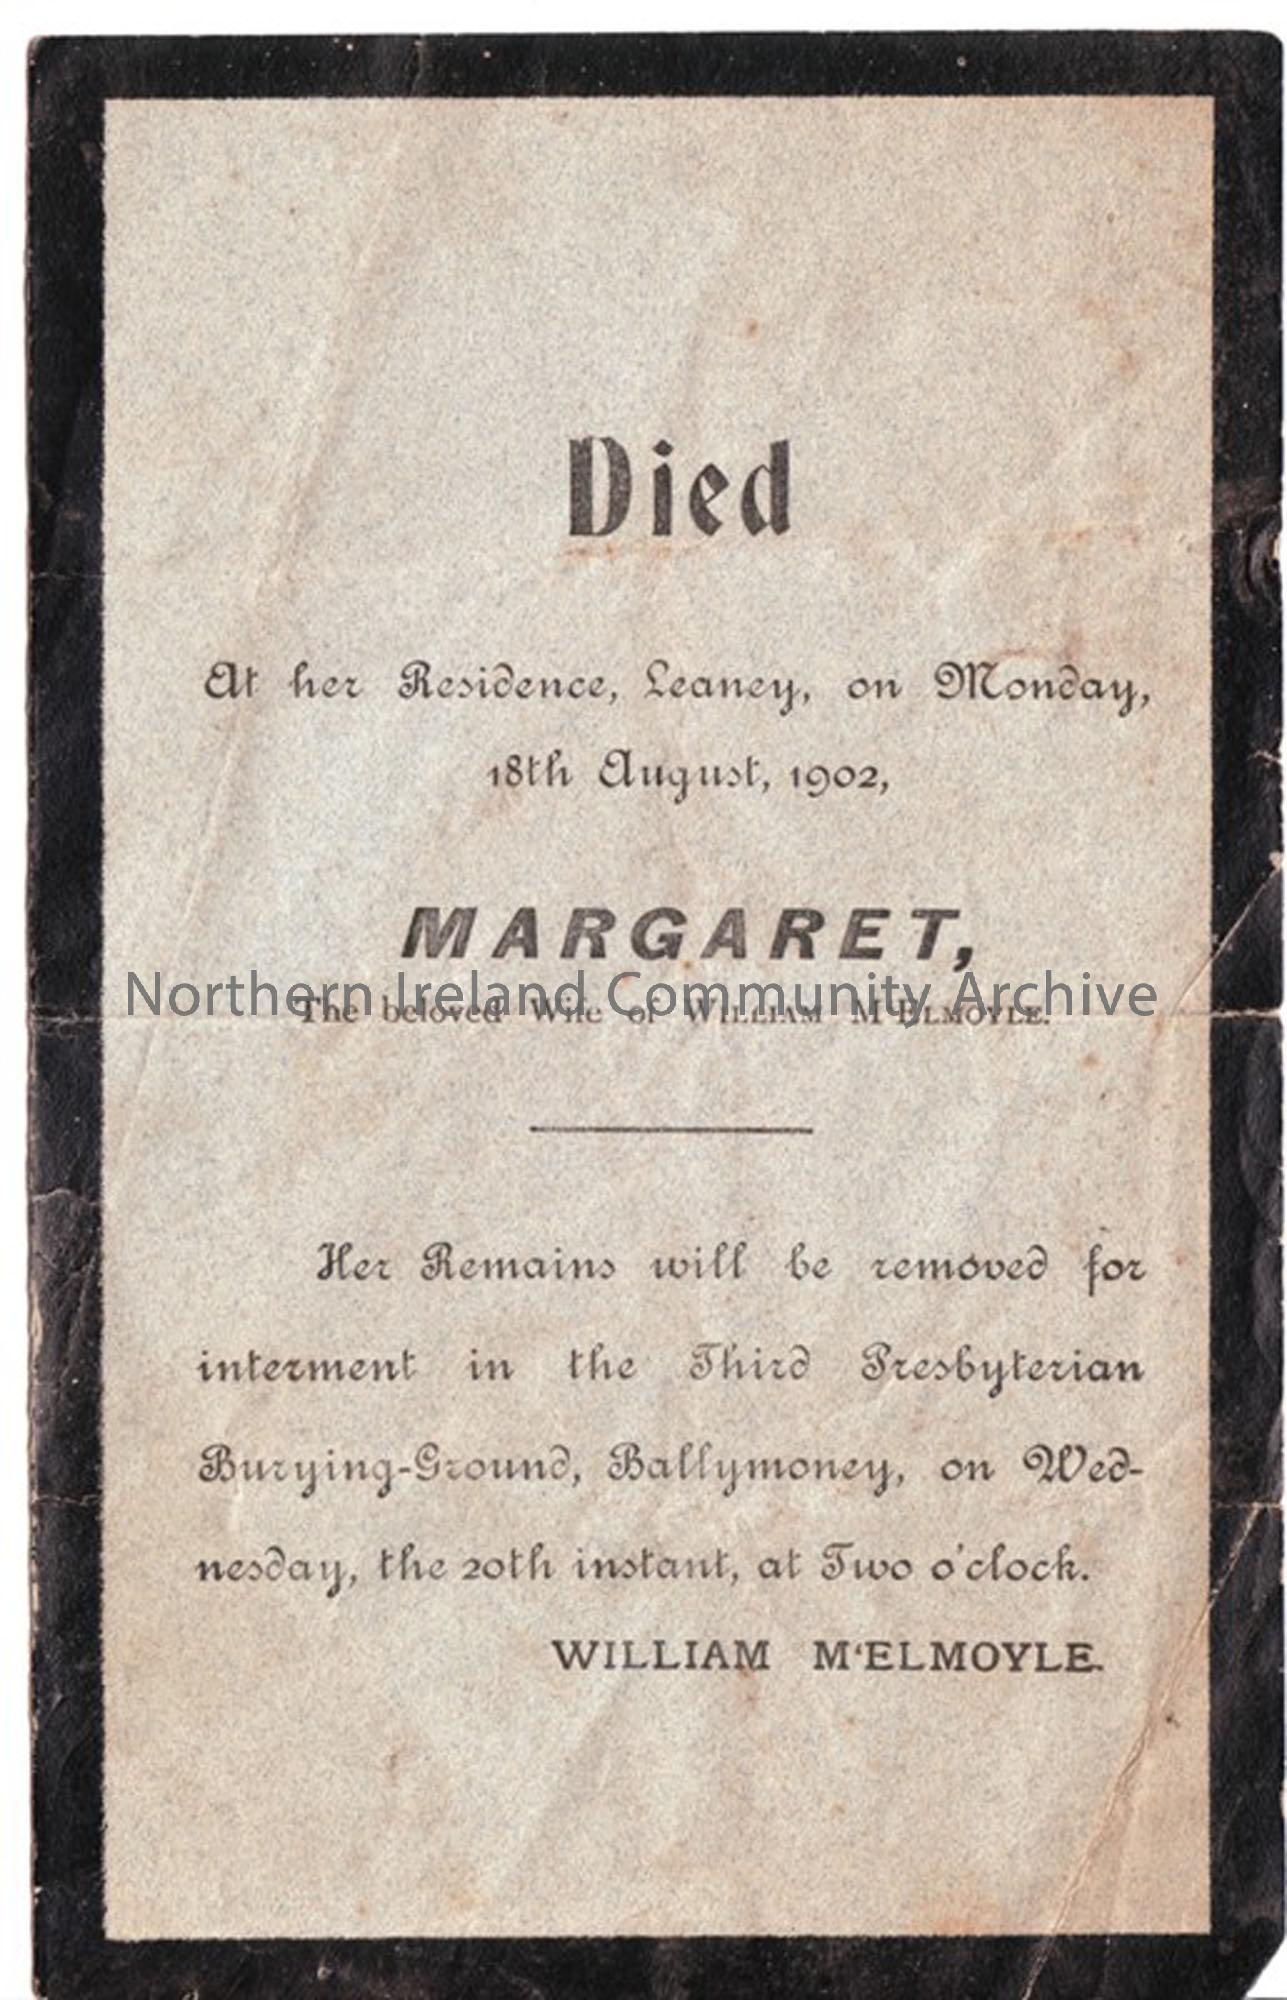 Margaret M’Elmoyle of Leaney, buried in Third Presbyterian Burying Ground, Ballymoney d.18th August 1902